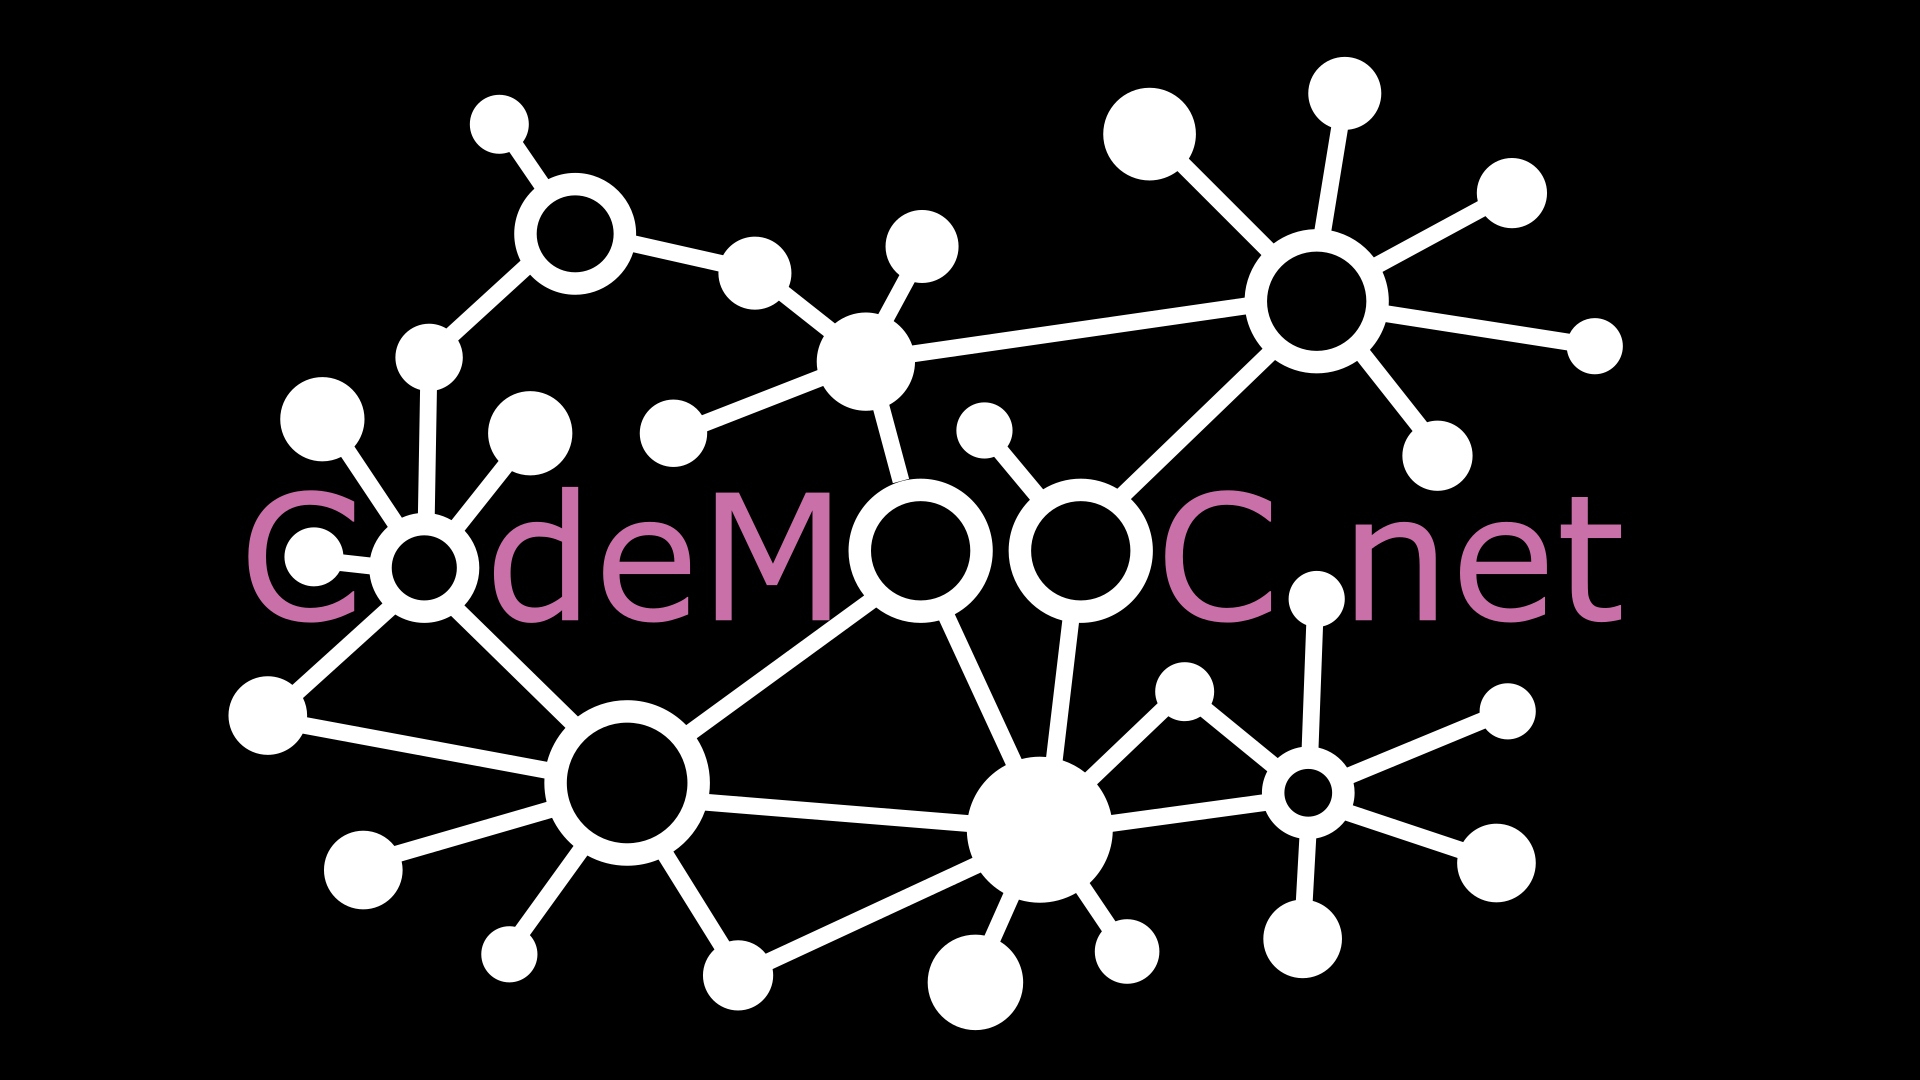 CodeMOOC.net logo